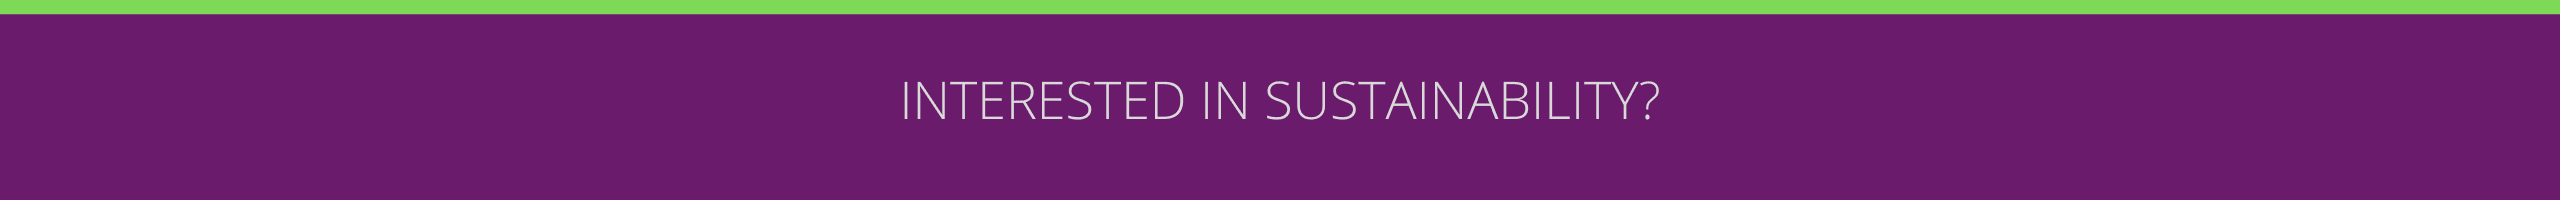 Sustainability module banner